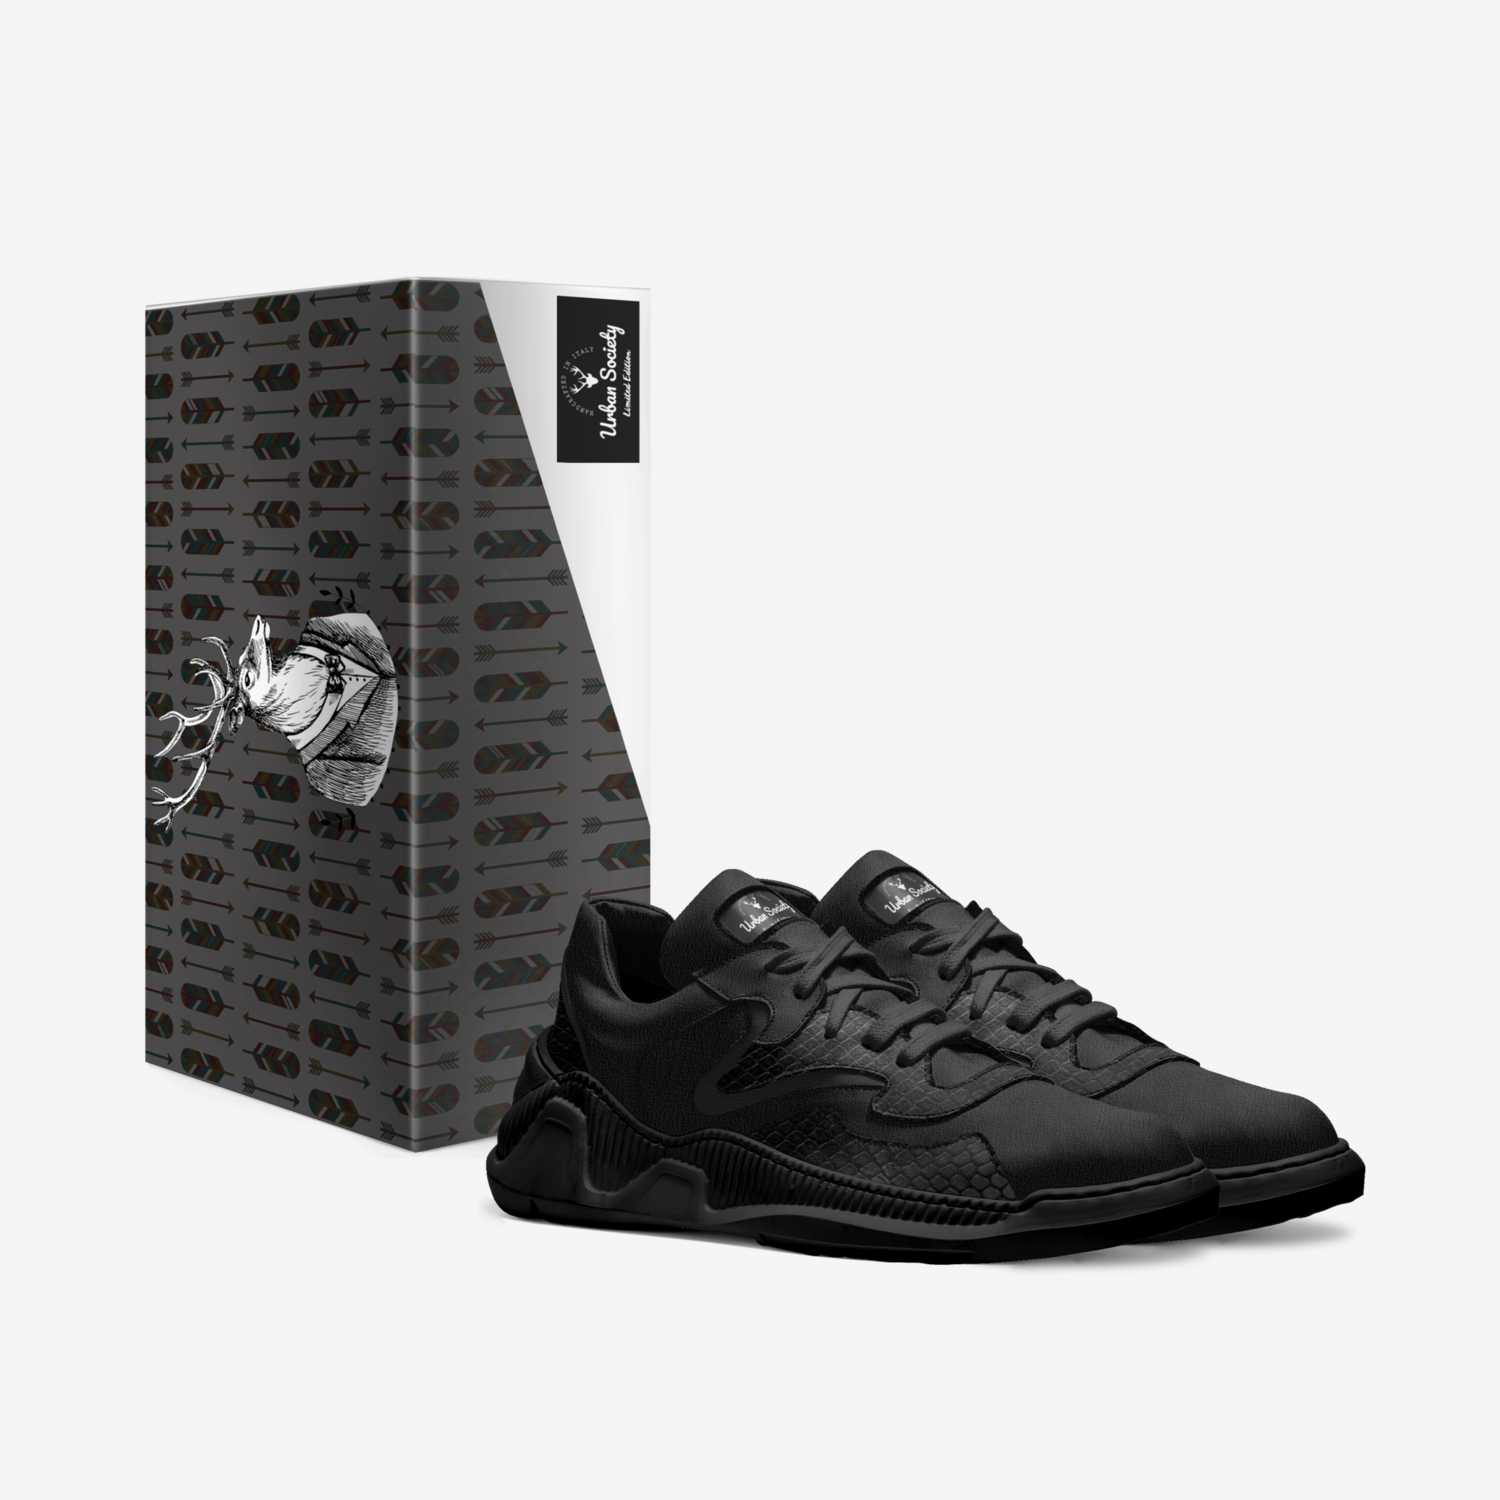 Urban Society custom made in Italy shoes by Urban Society 1987 | Box view